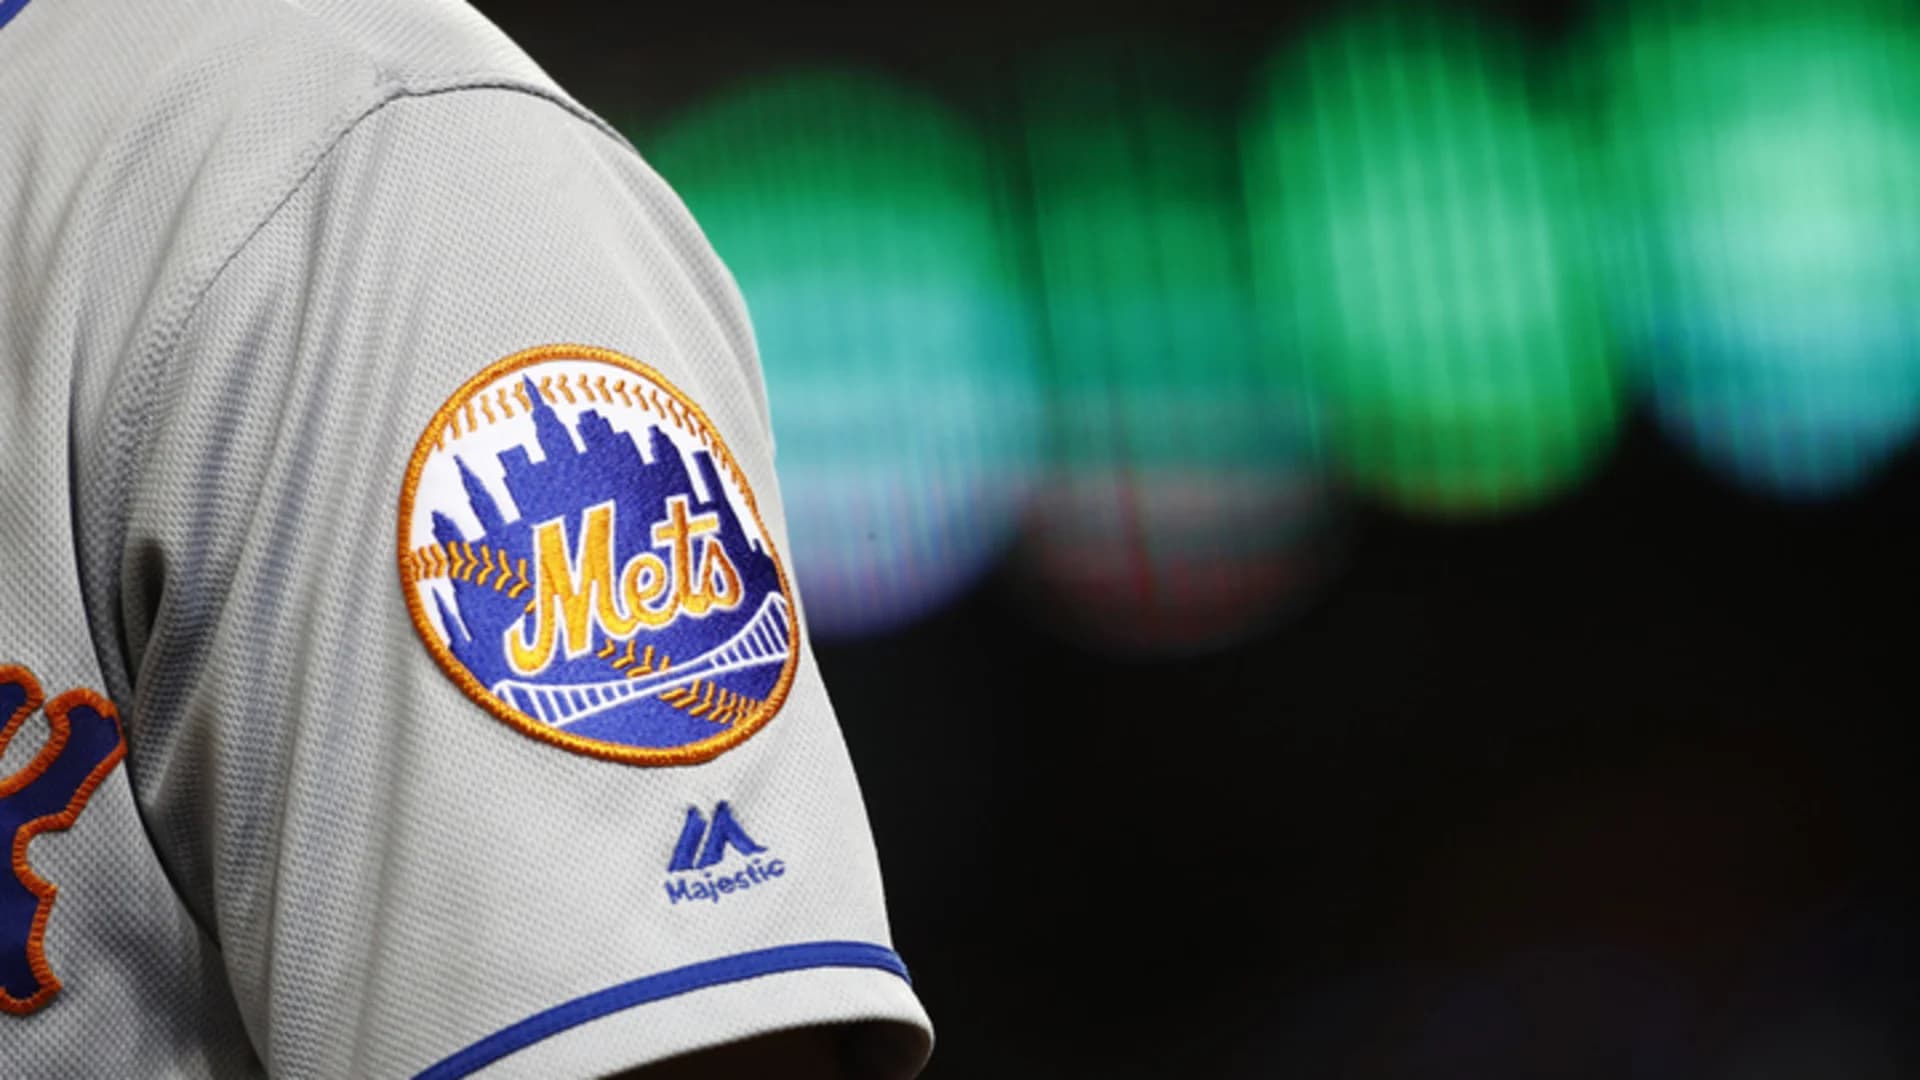 New York Mets postpone Opening Day game due to rain forecast